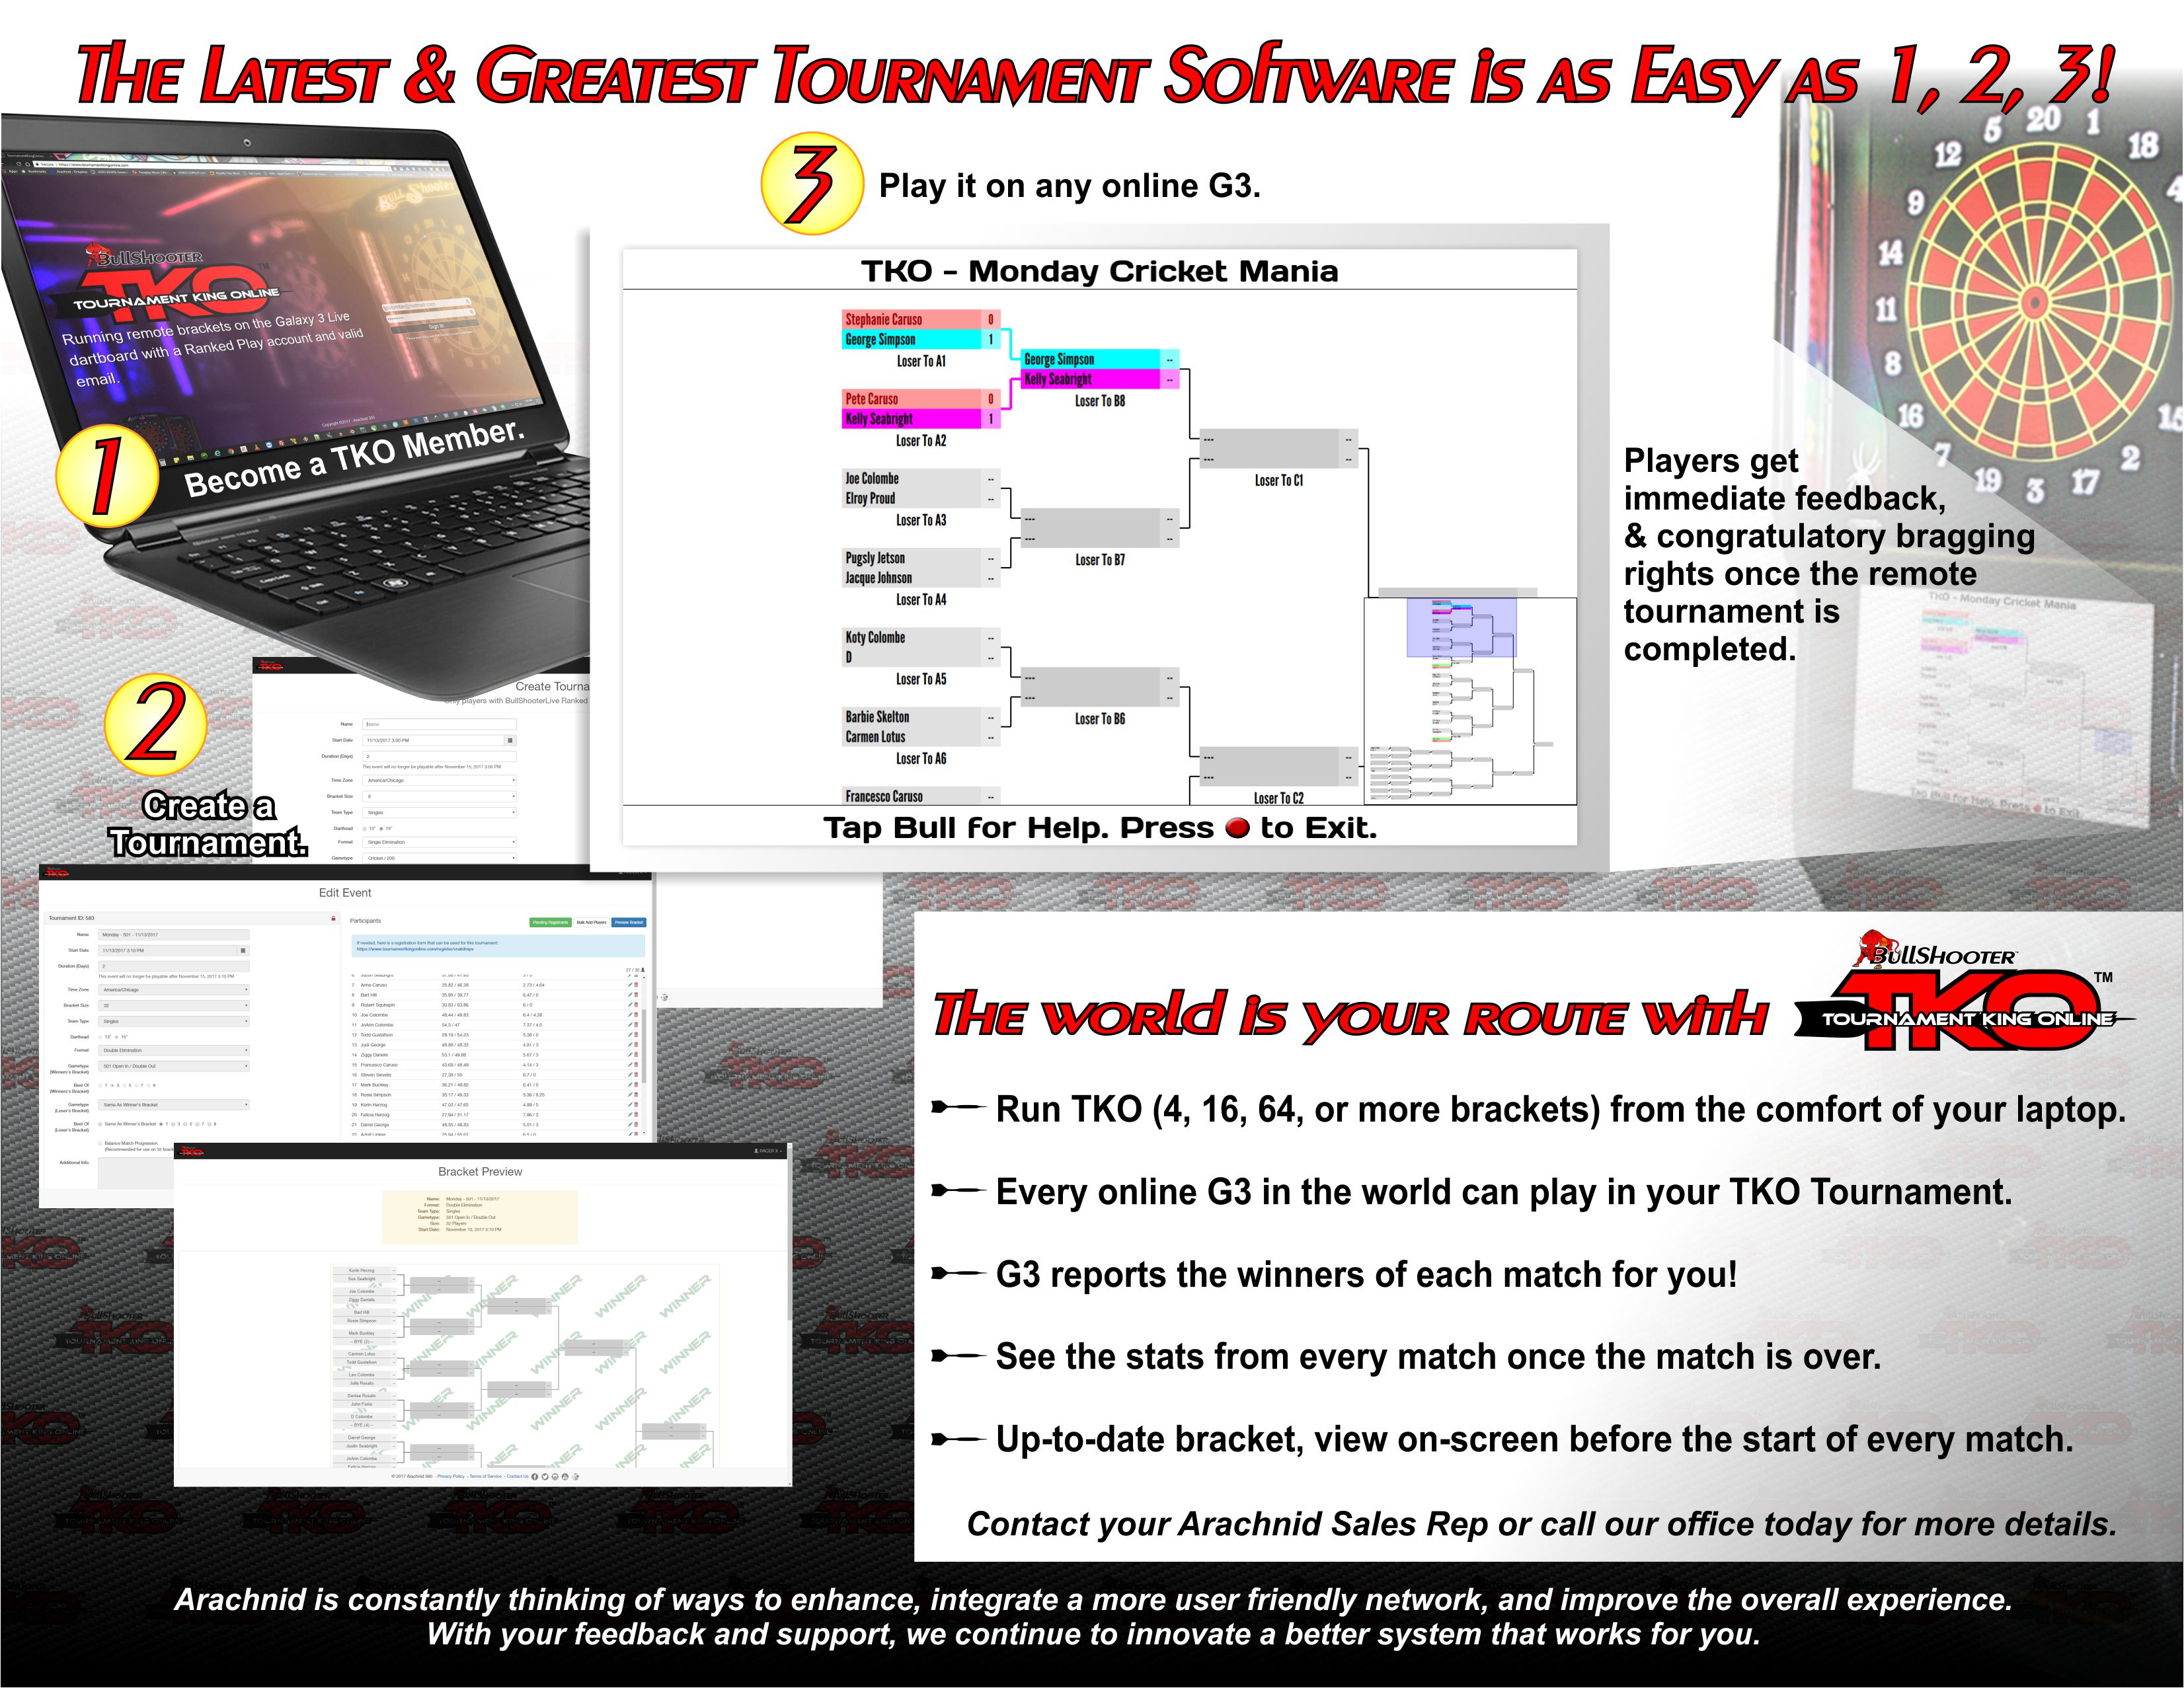 Tournament Software